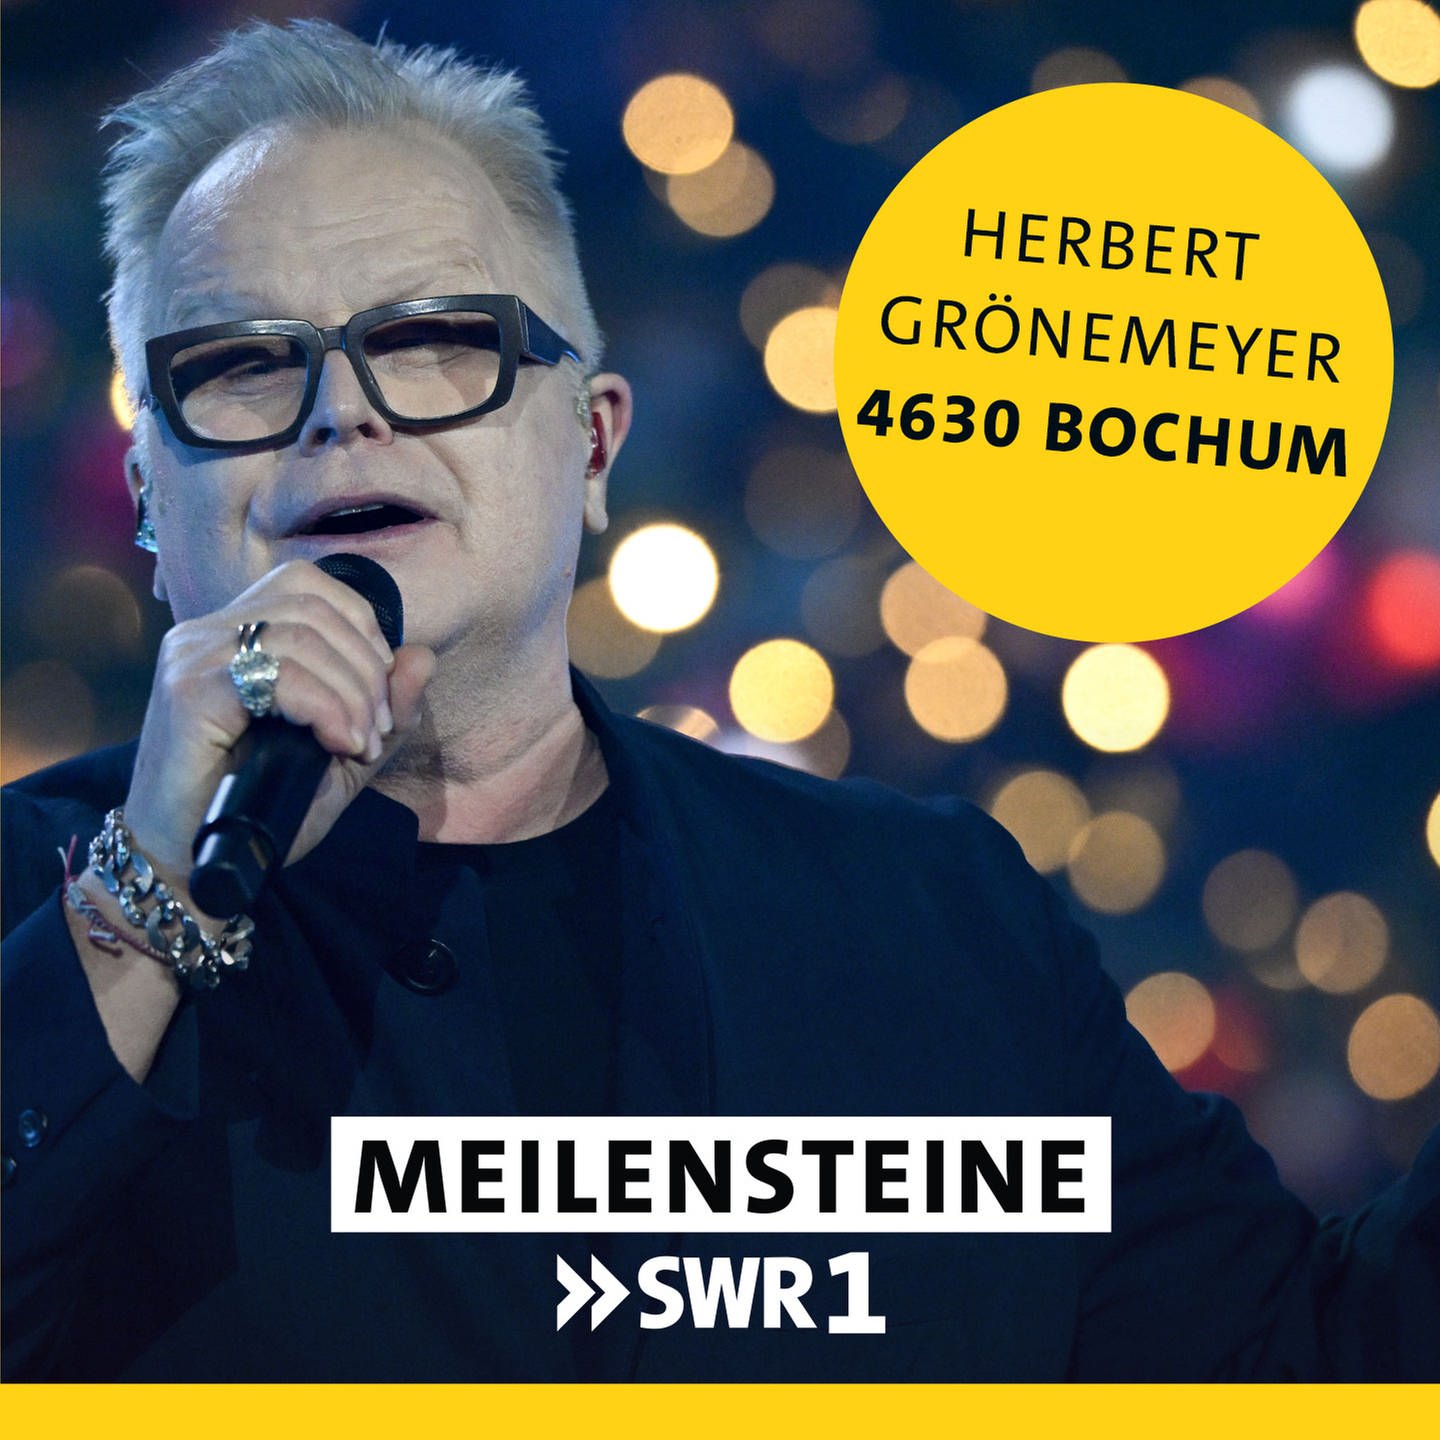 Herbert Grönemeyer – "4630 Bochum"